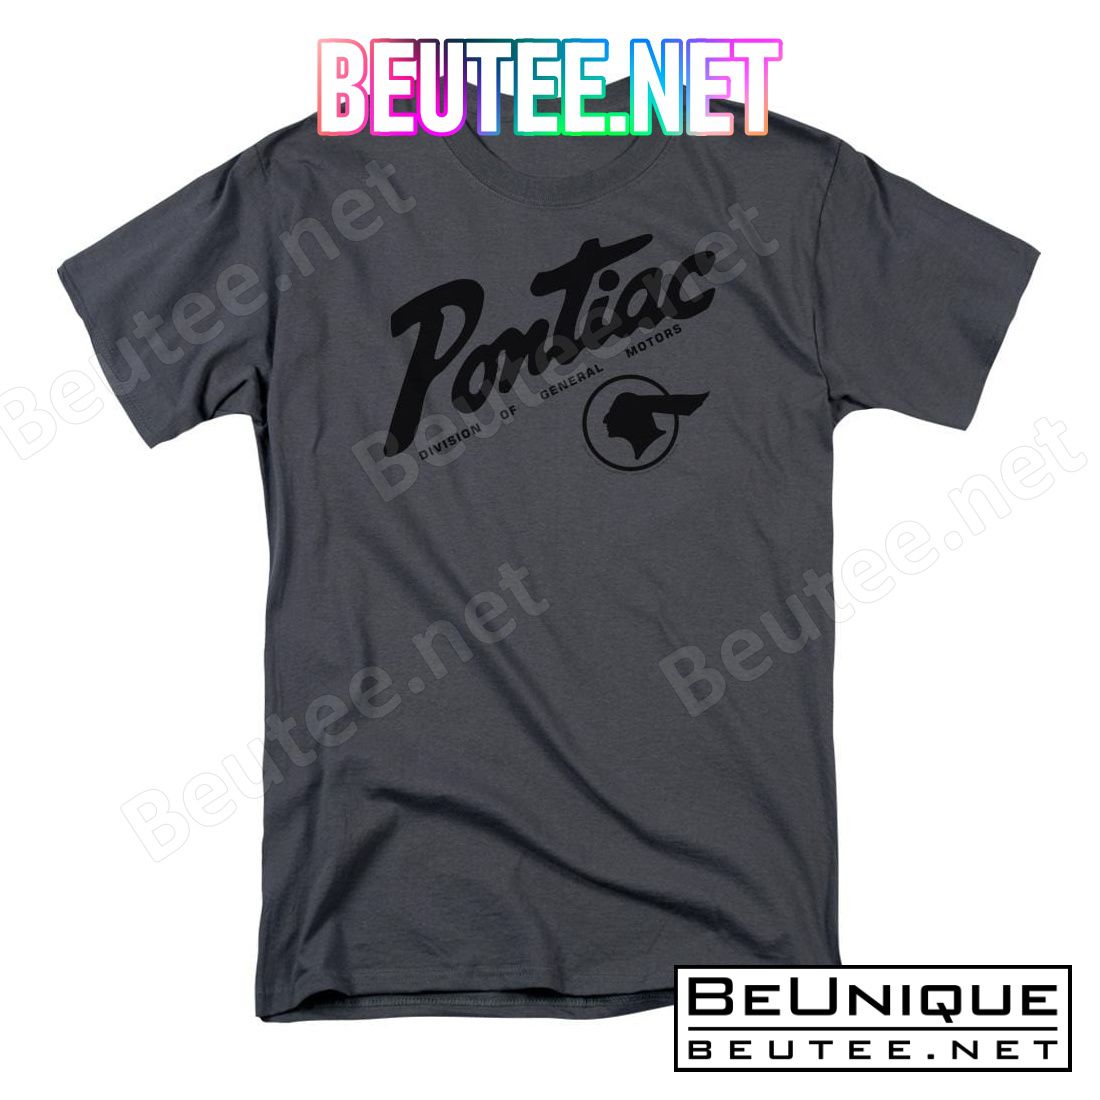 Pontiac Division Shirt